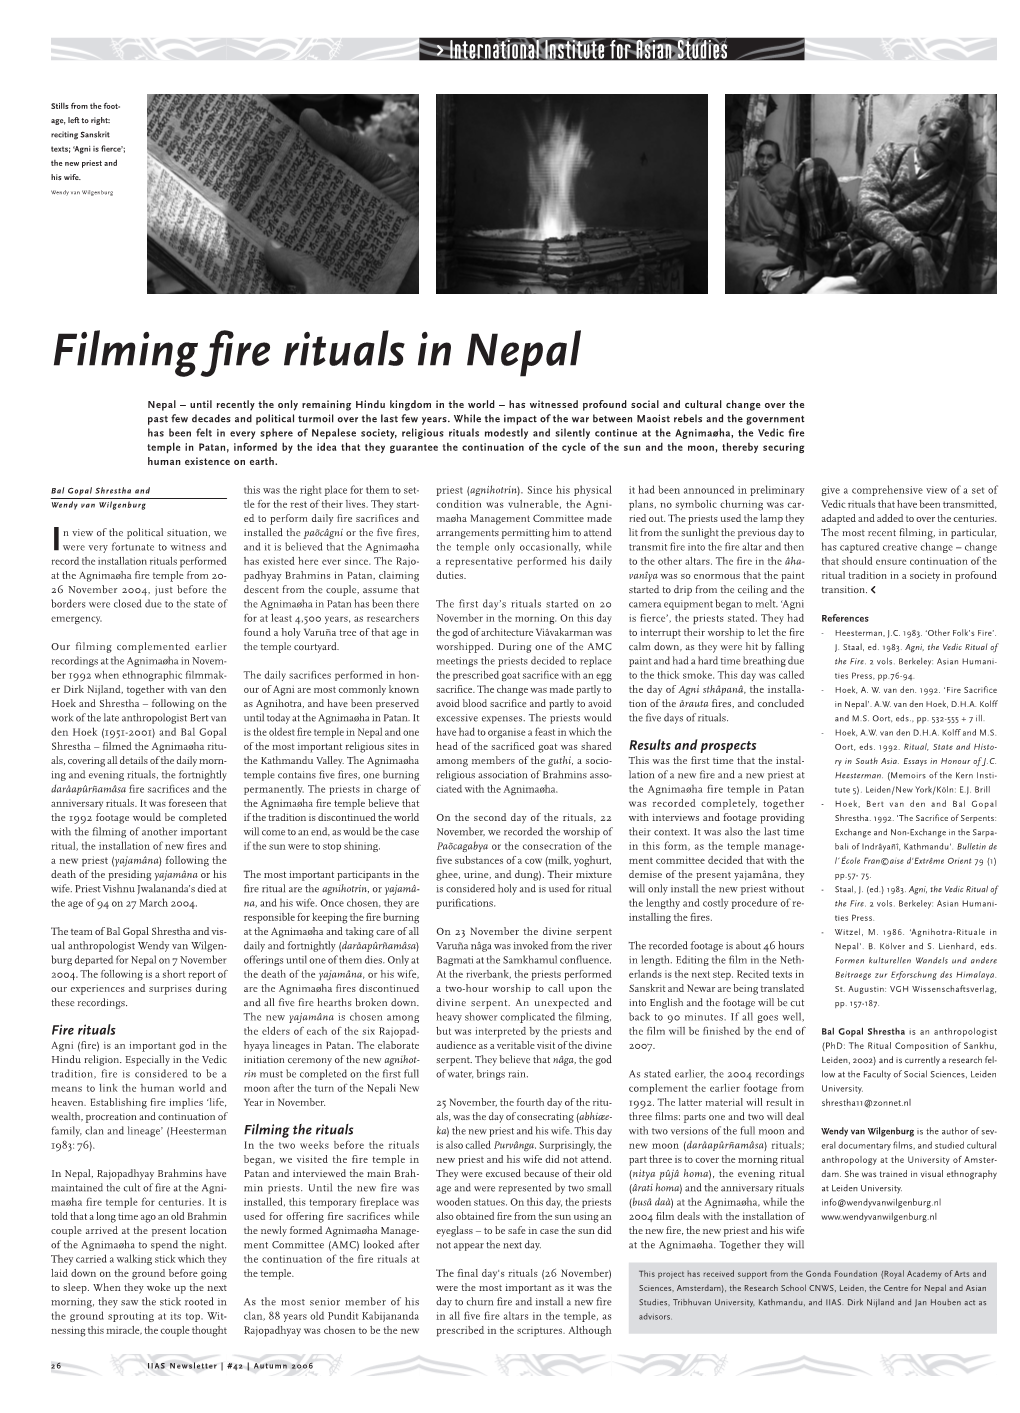 Filming Fire Rituals in Nepal